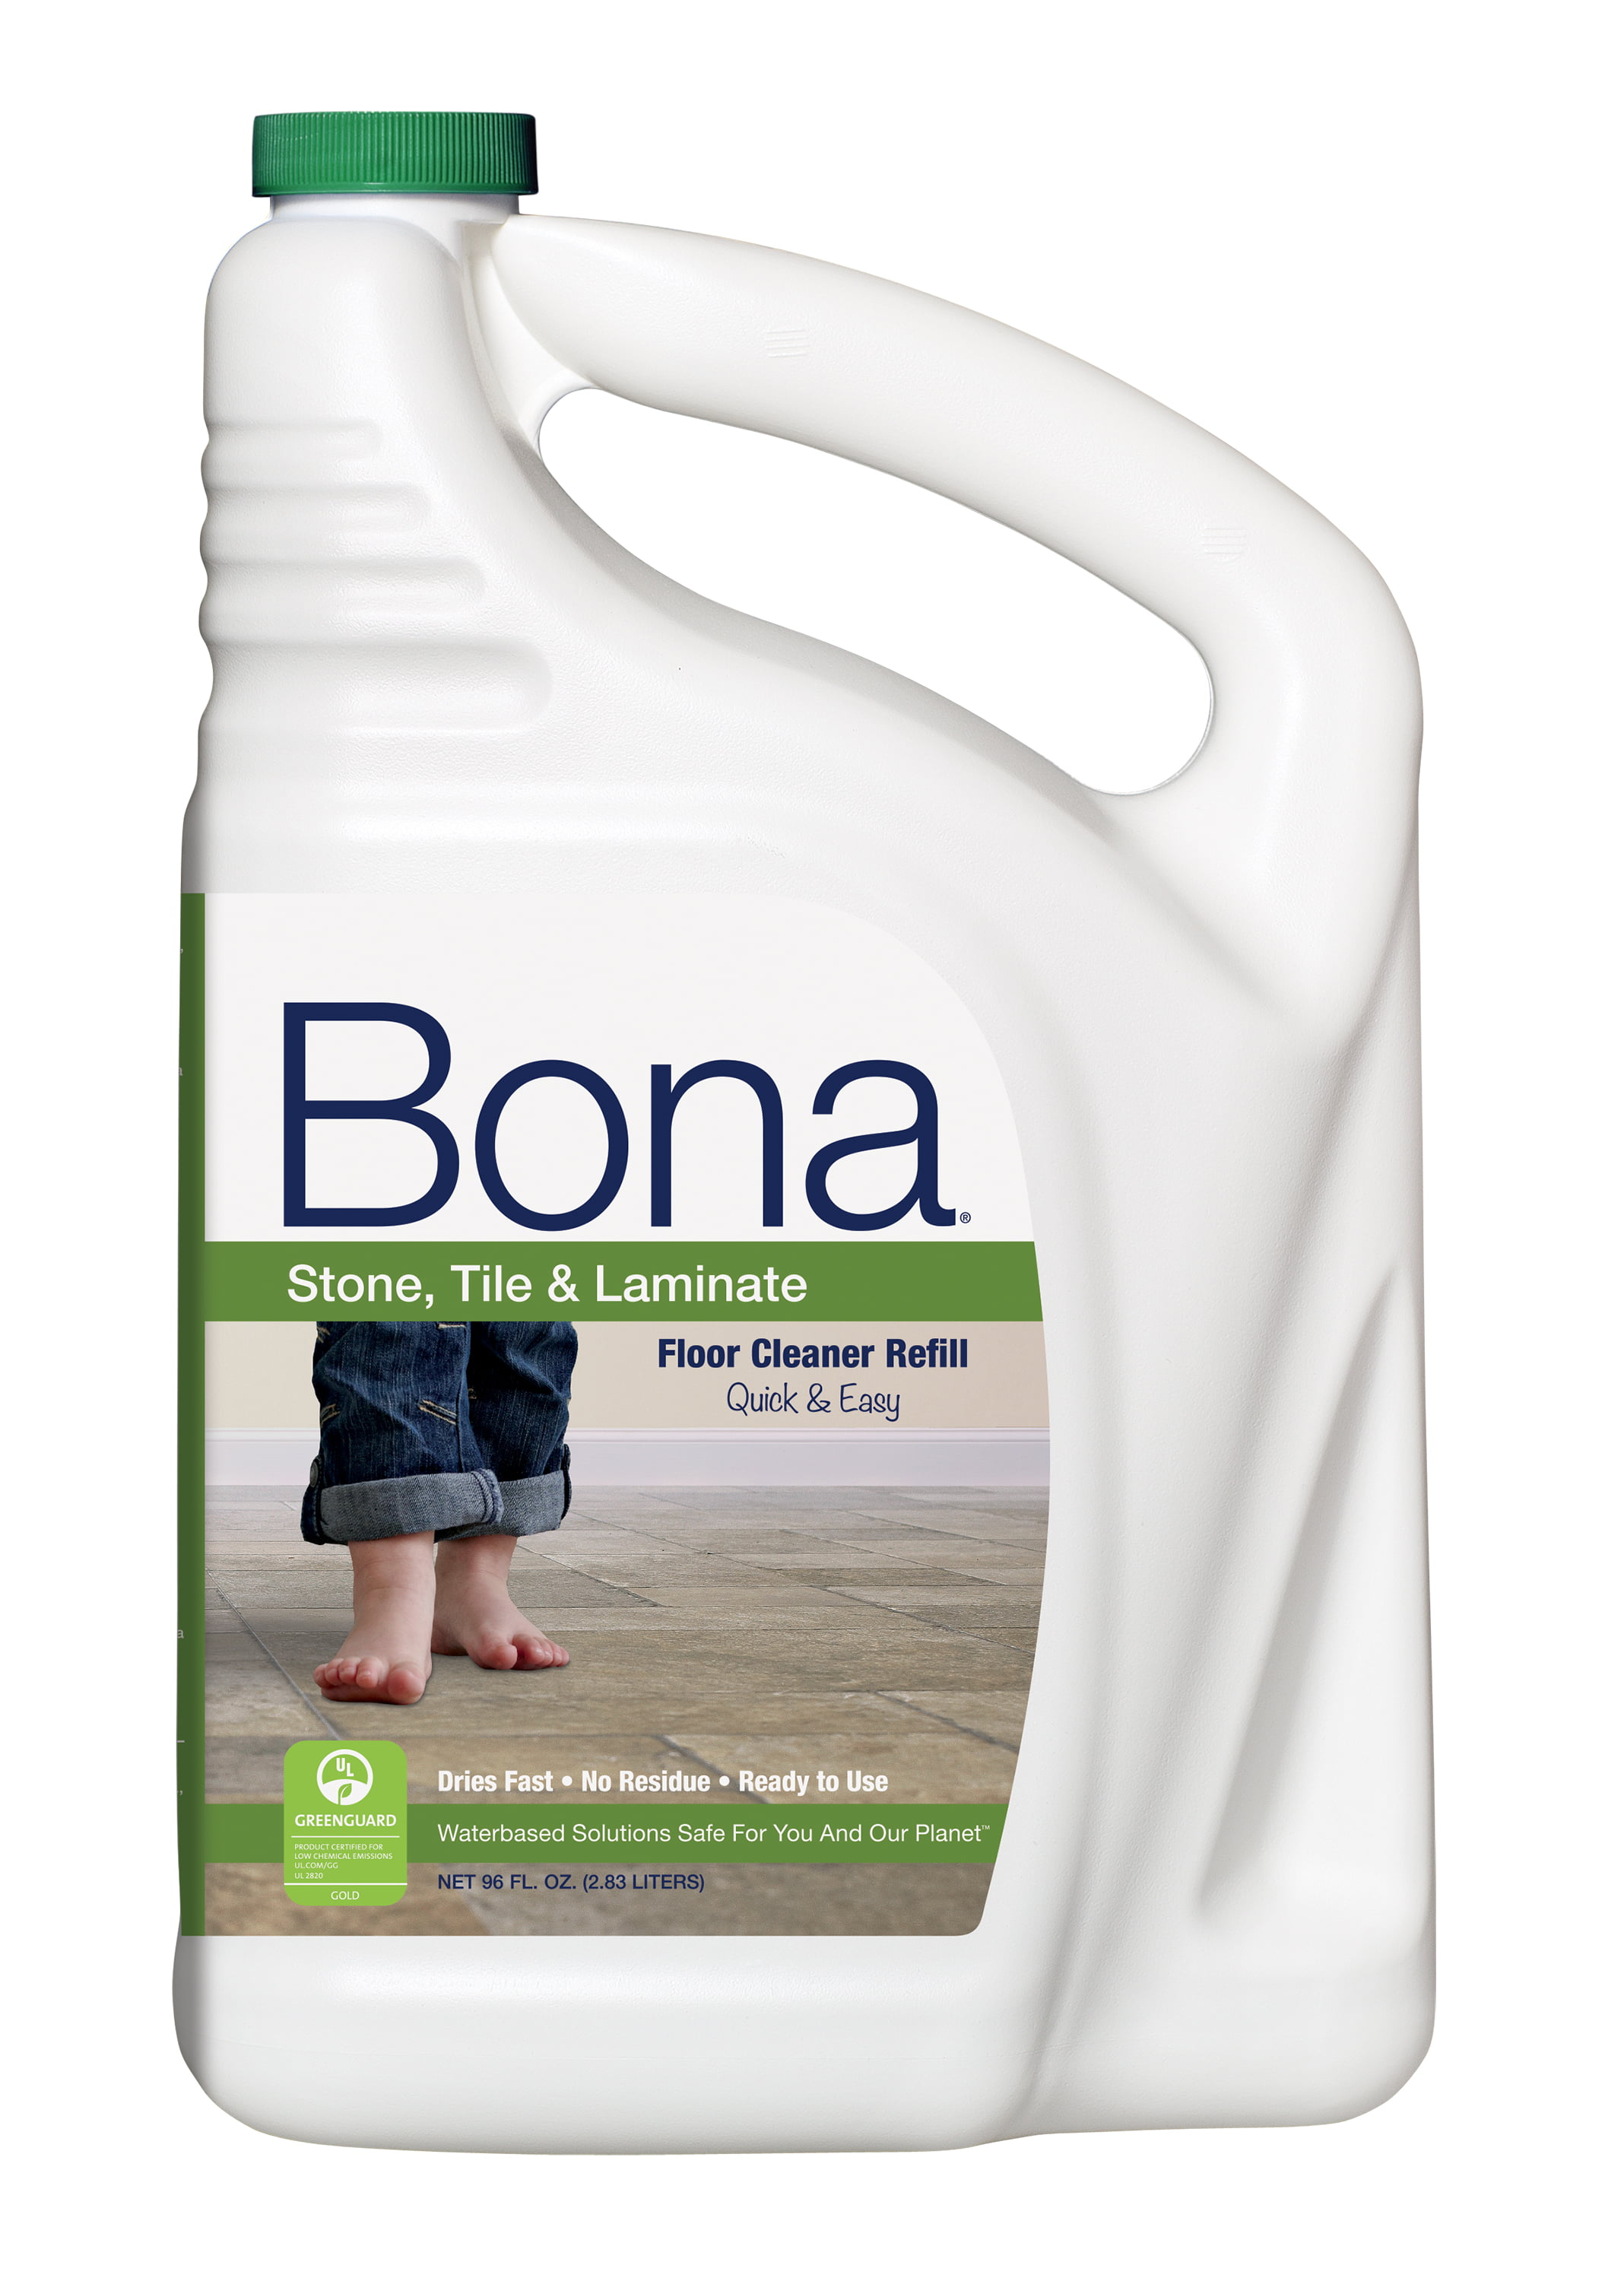 Bona Stone, Tile & Laminate Floor Cleaner Refill, 96 fl oz - Walmart.com